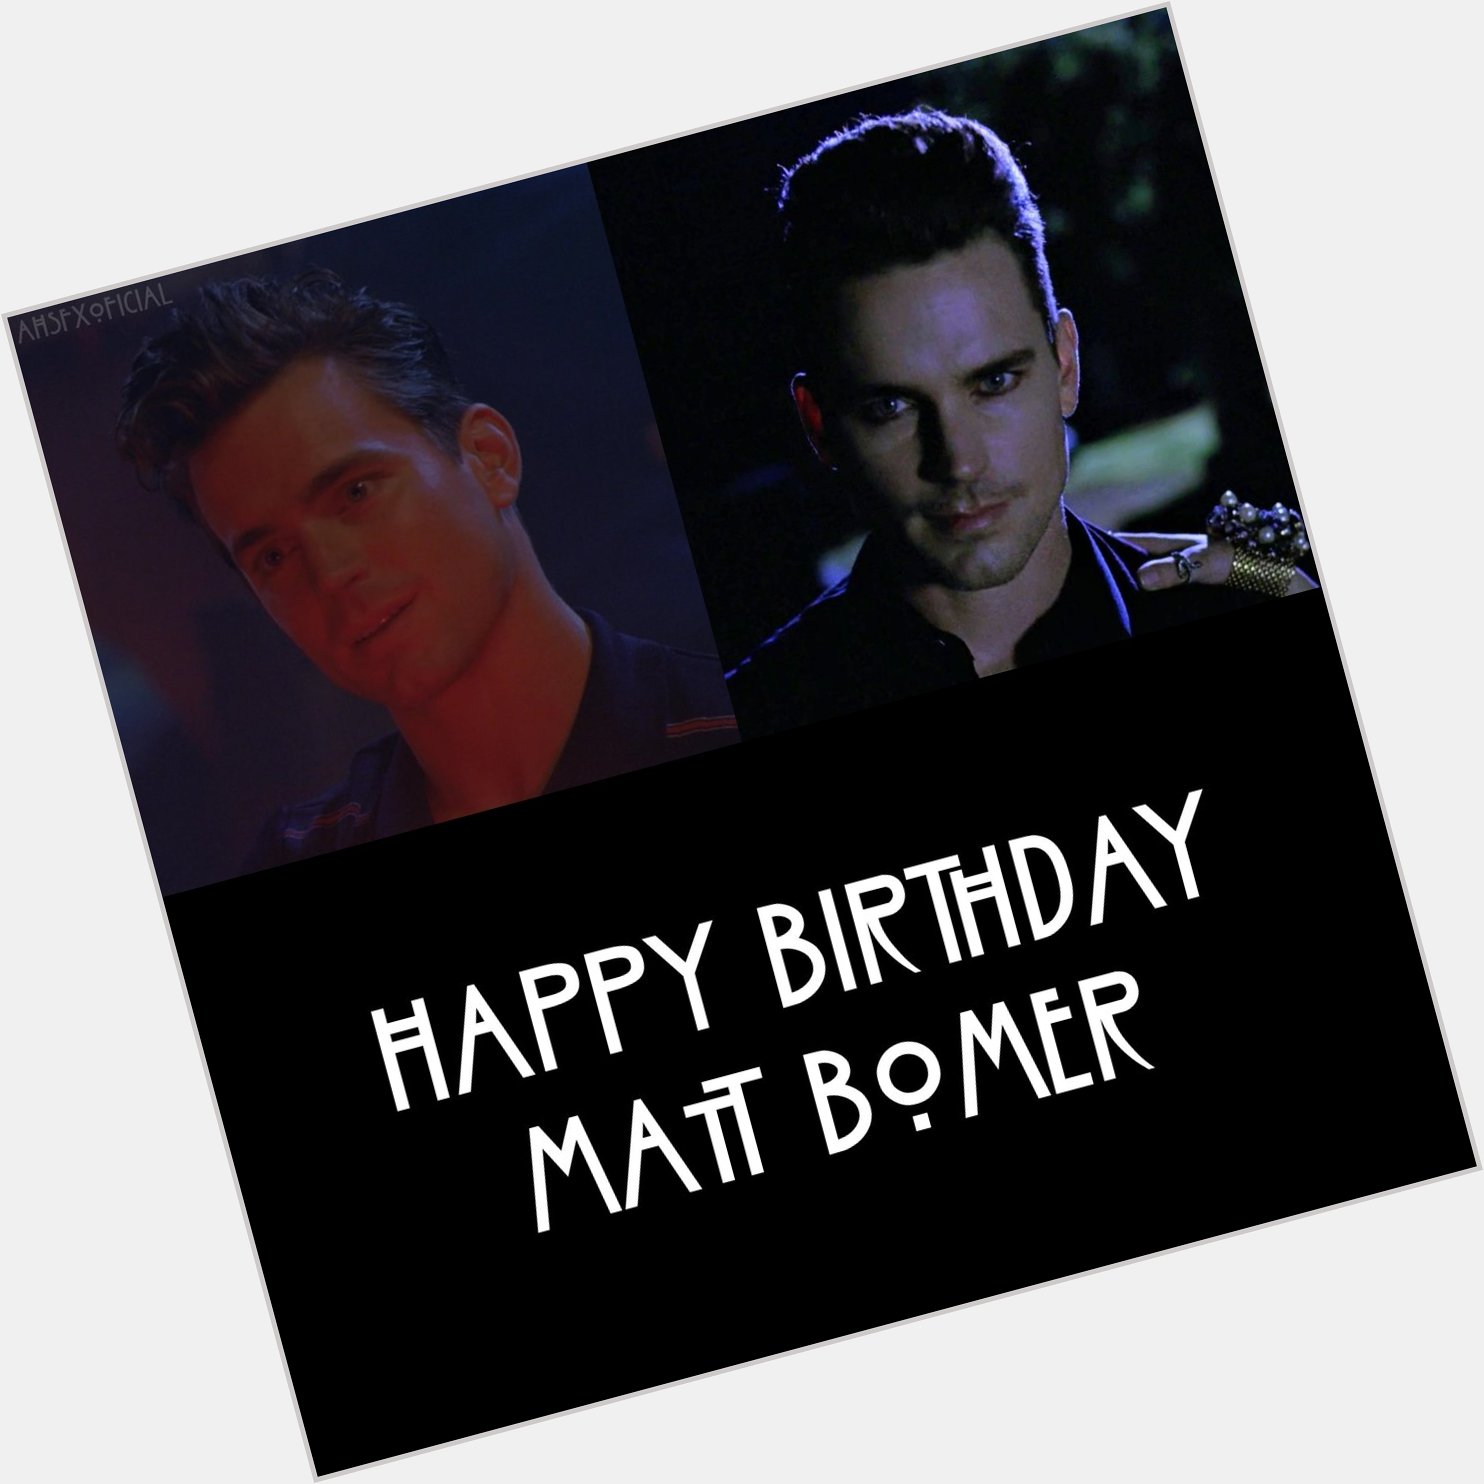 Matt Bomer está completando 43 anos hoje!

Happy birthday   